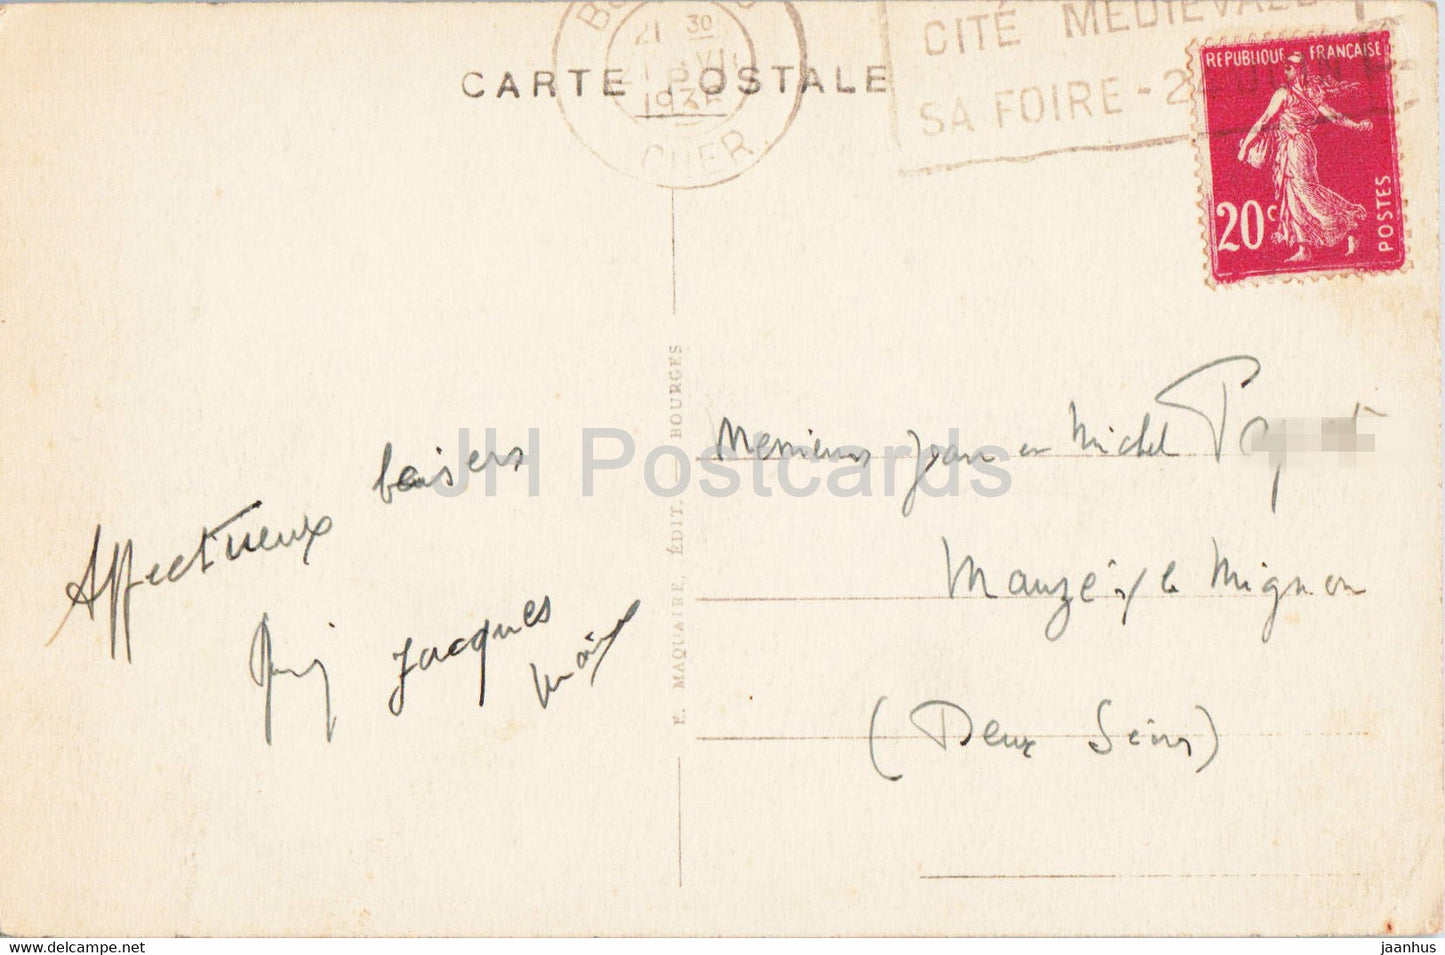 Bourges - Palais Jacques Coeur - La Facade - 301 - old postcard - 1936 - France - used